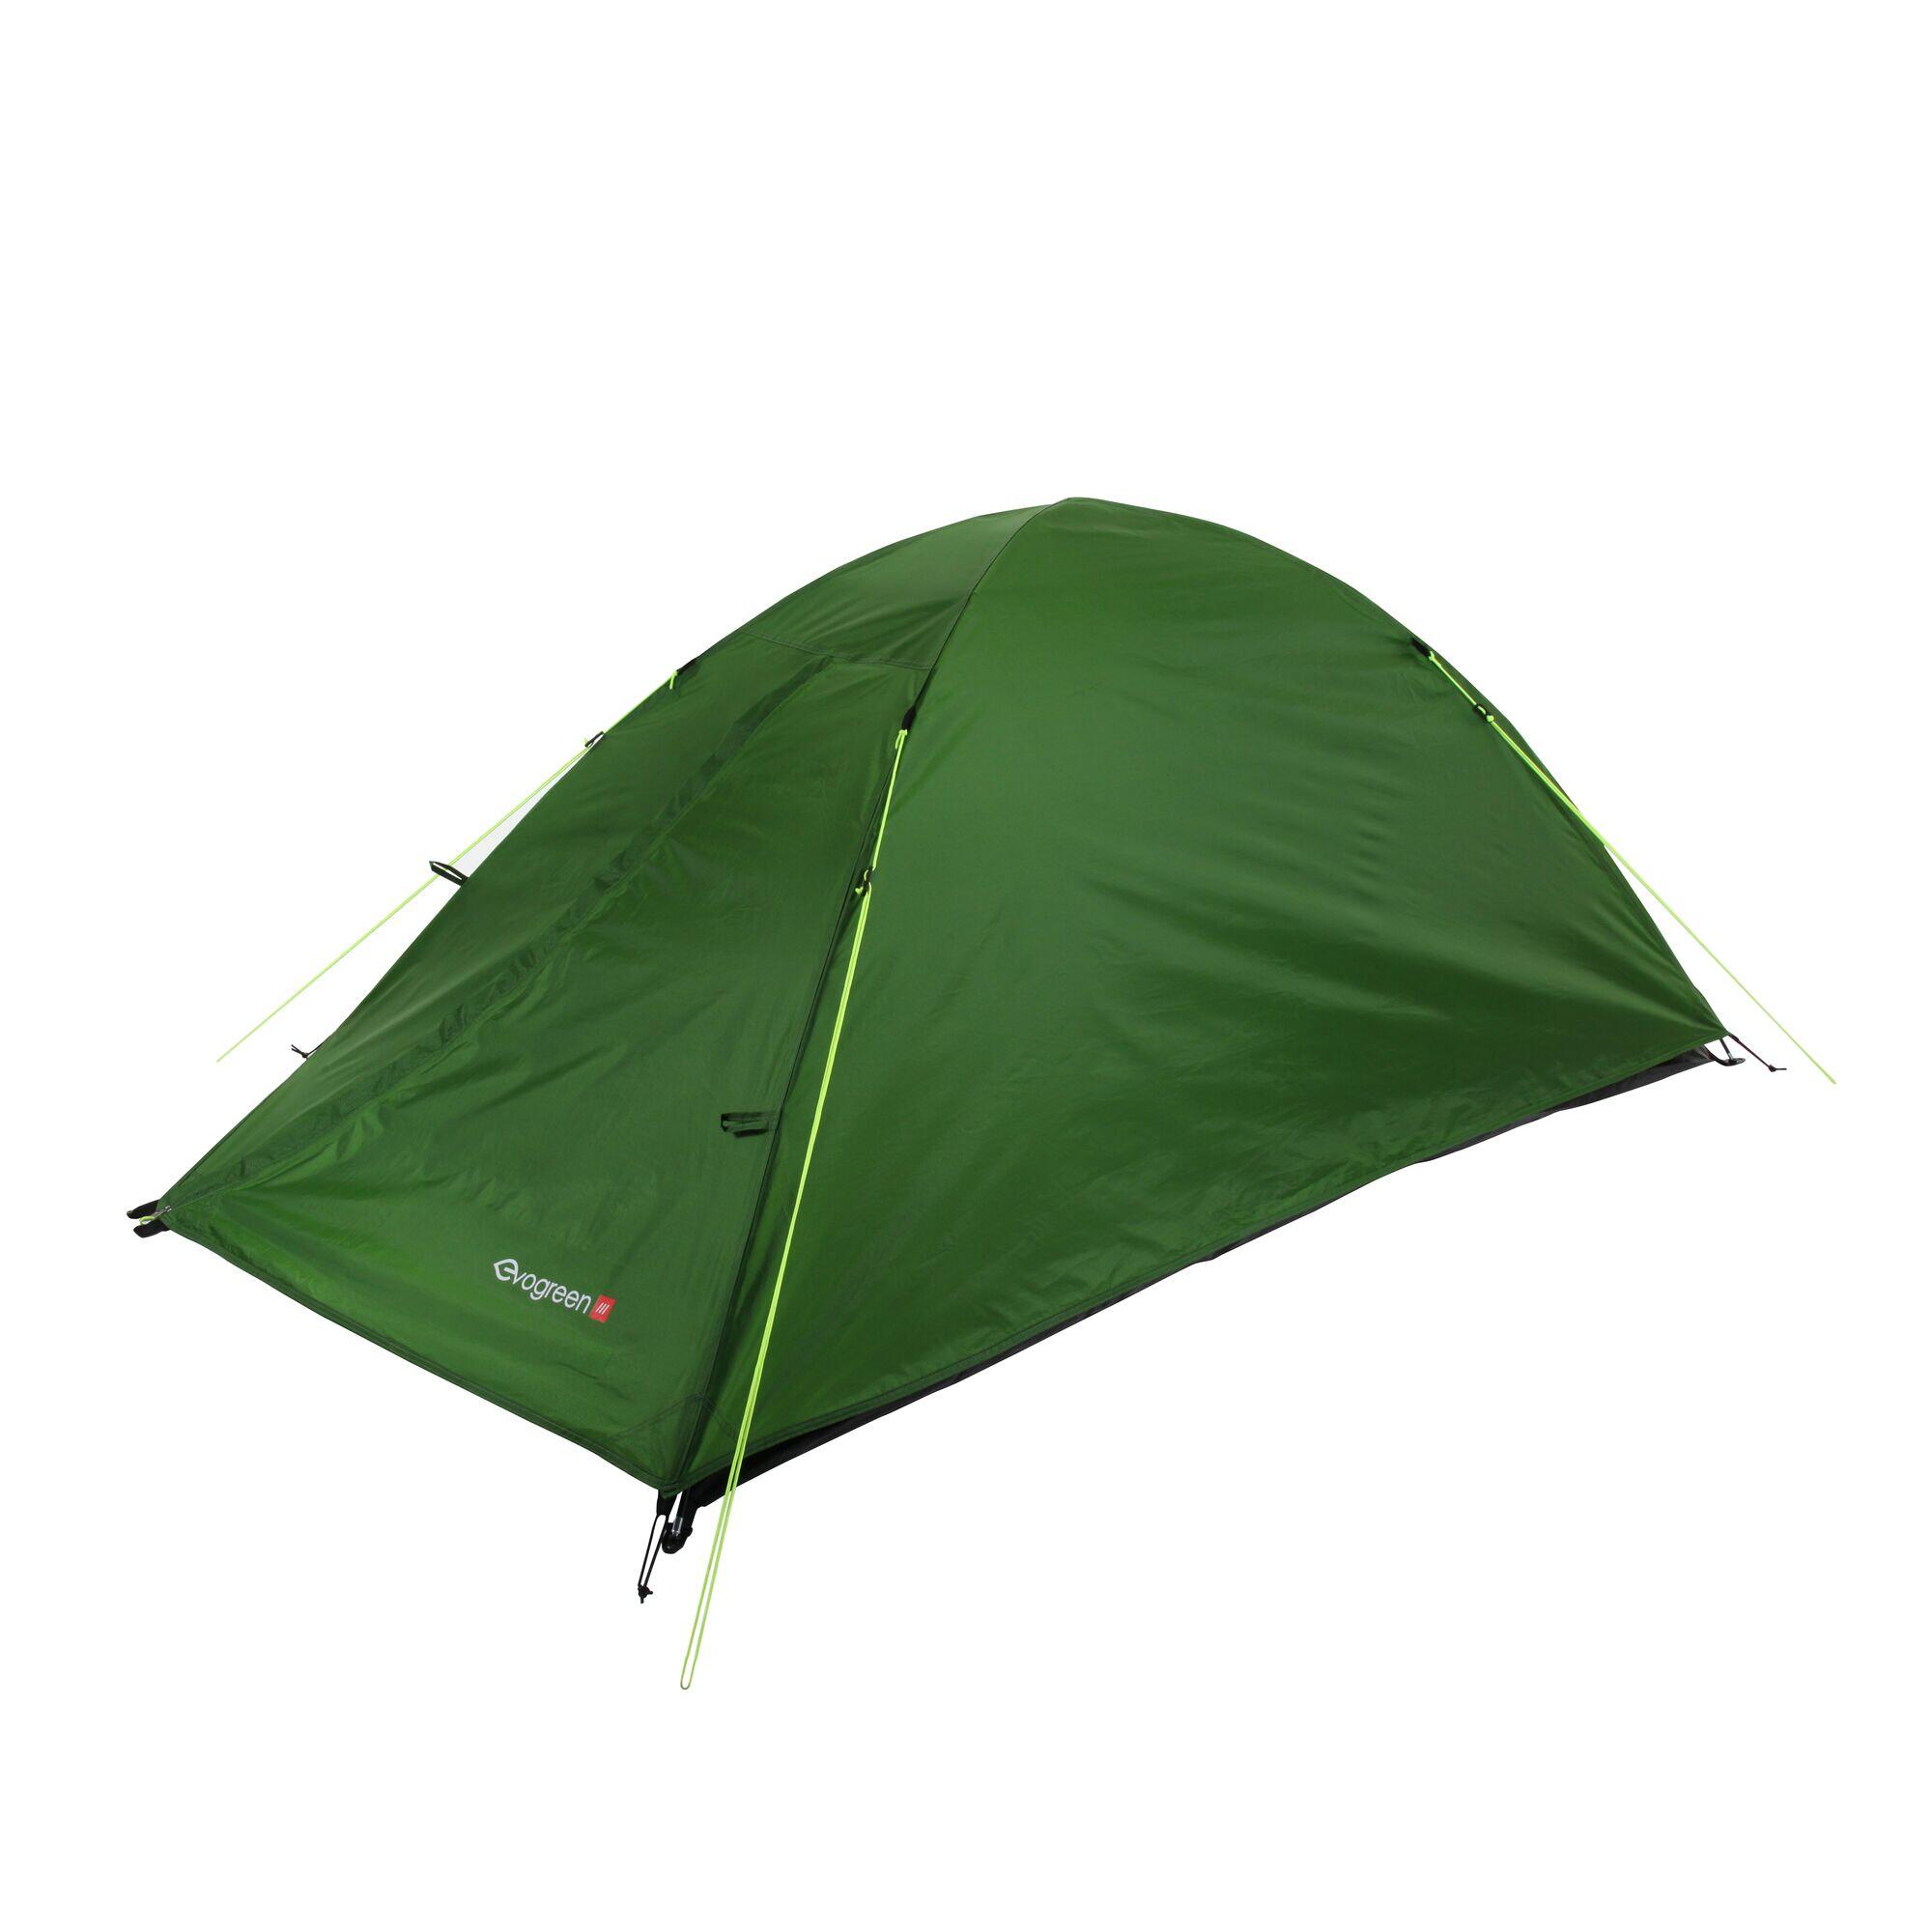 REGATTA Evogreen 3-Man Adults' Camping Camping Tent